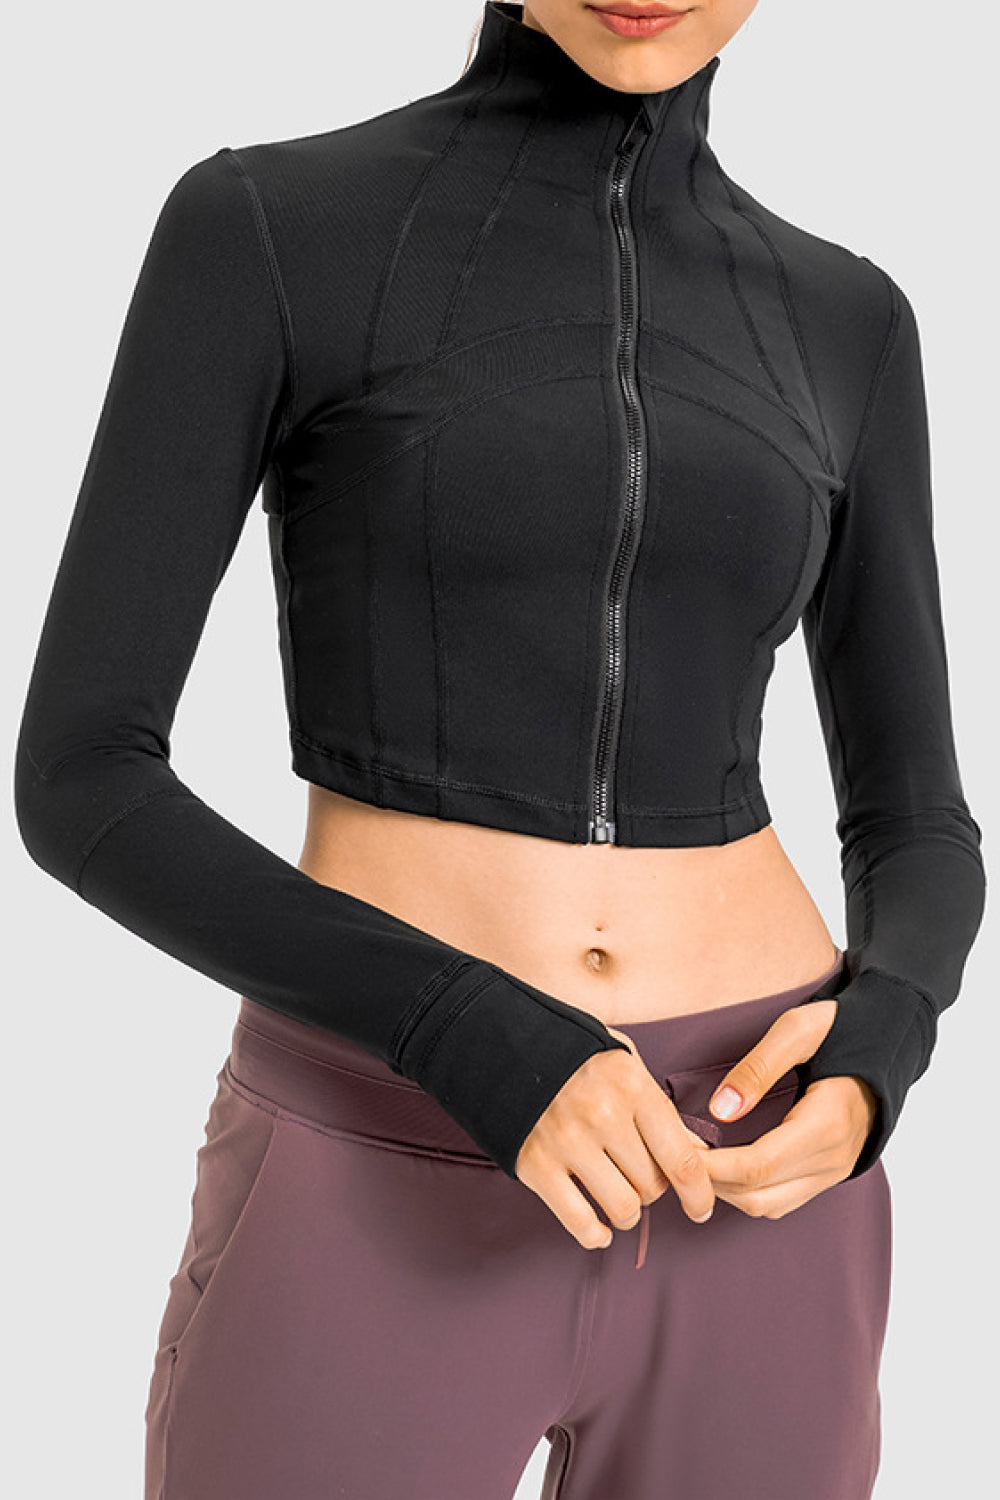 Zip Front Cropped Slim Fit Women's Sports Jacket